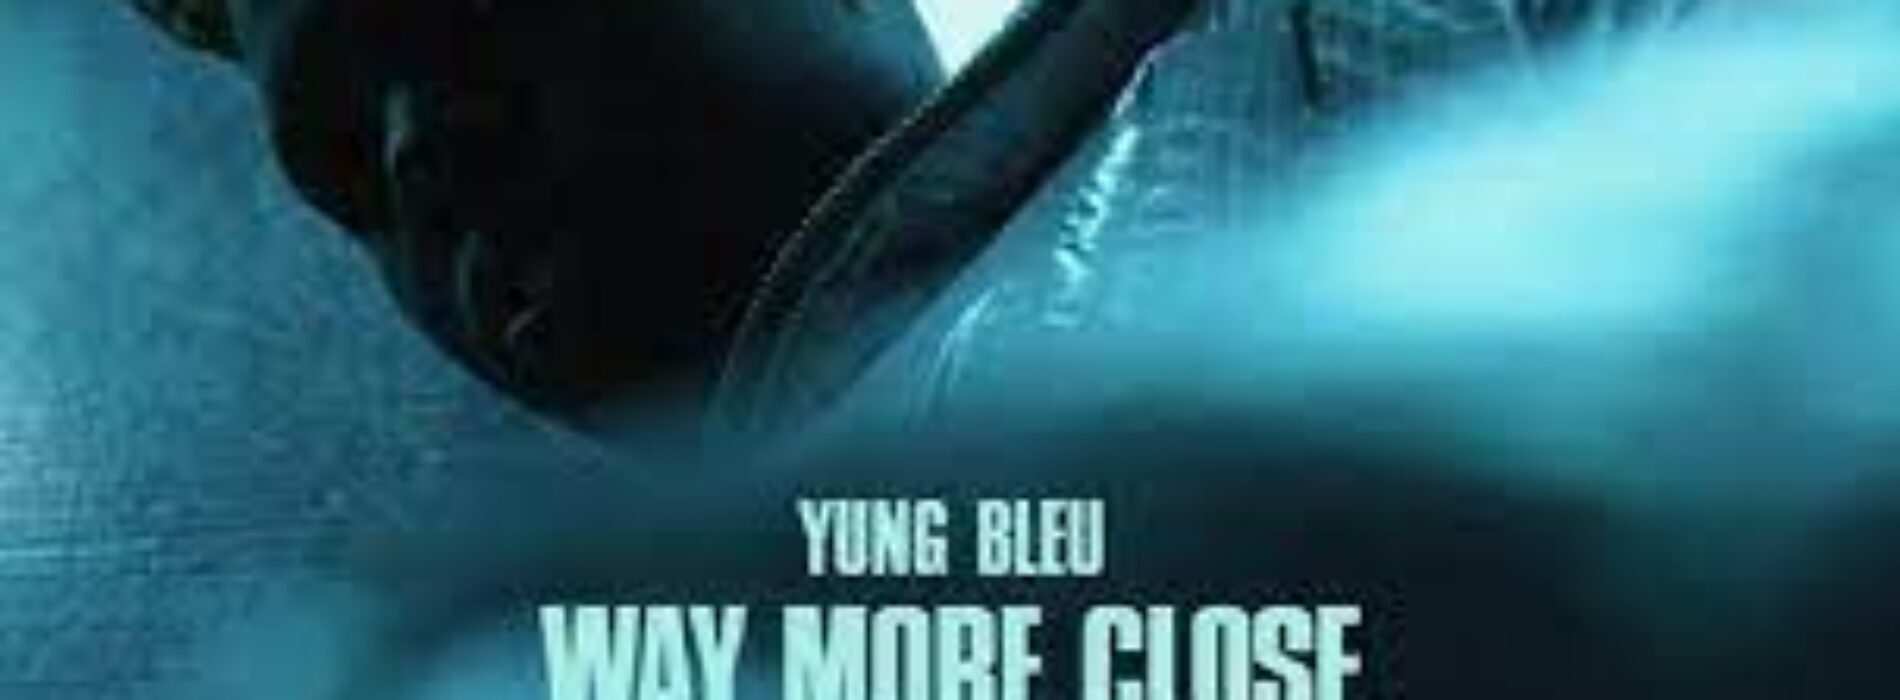 Yung Bleu – Way More Close (Stuck In A Box) [Official Video) ft. Big Sean – Août 2021